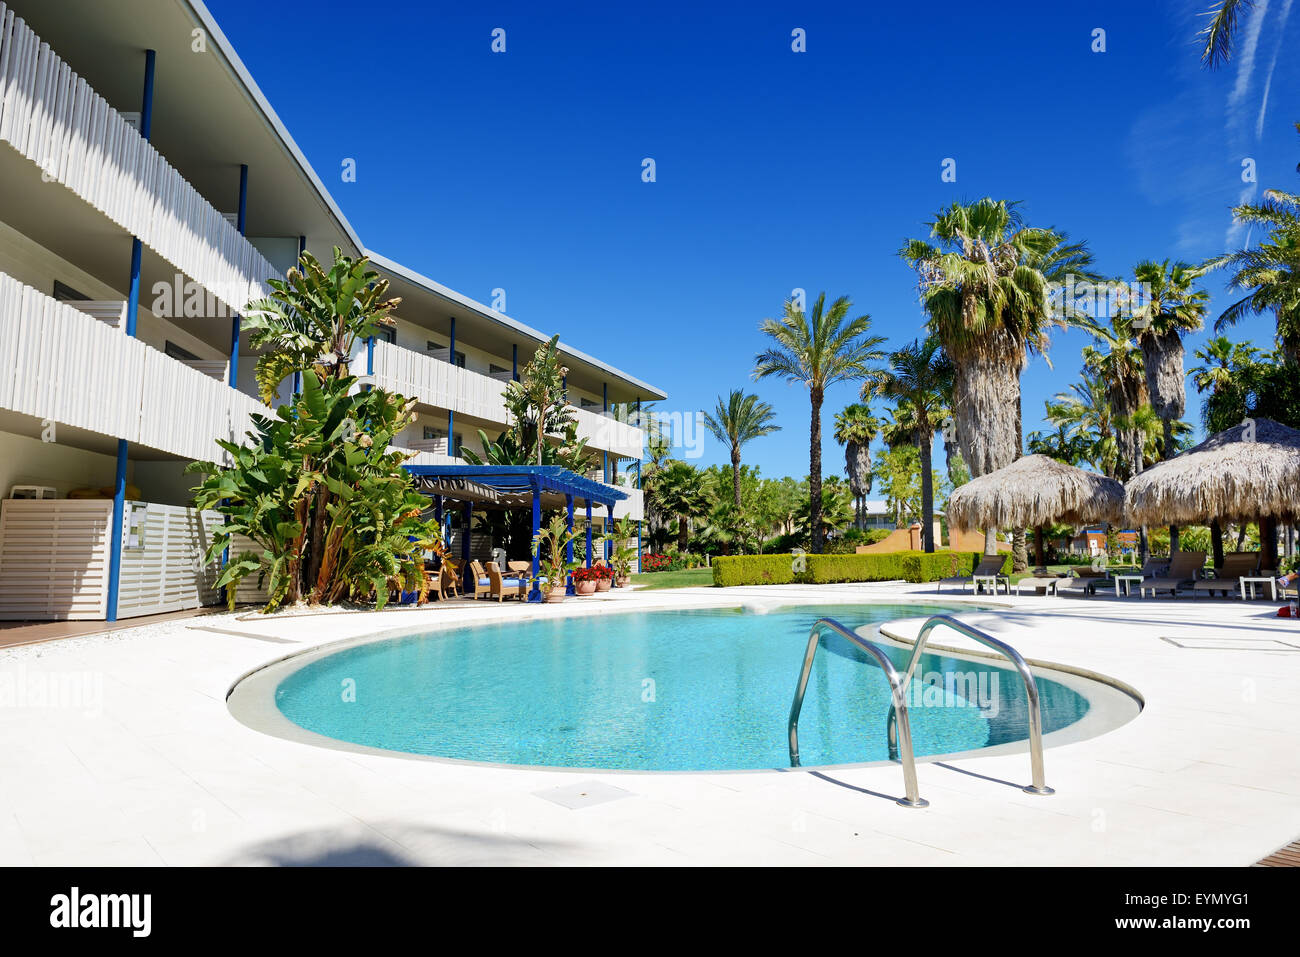 Swimming pool at luxury hotel, Costa Dorada, Spain Stock Photo